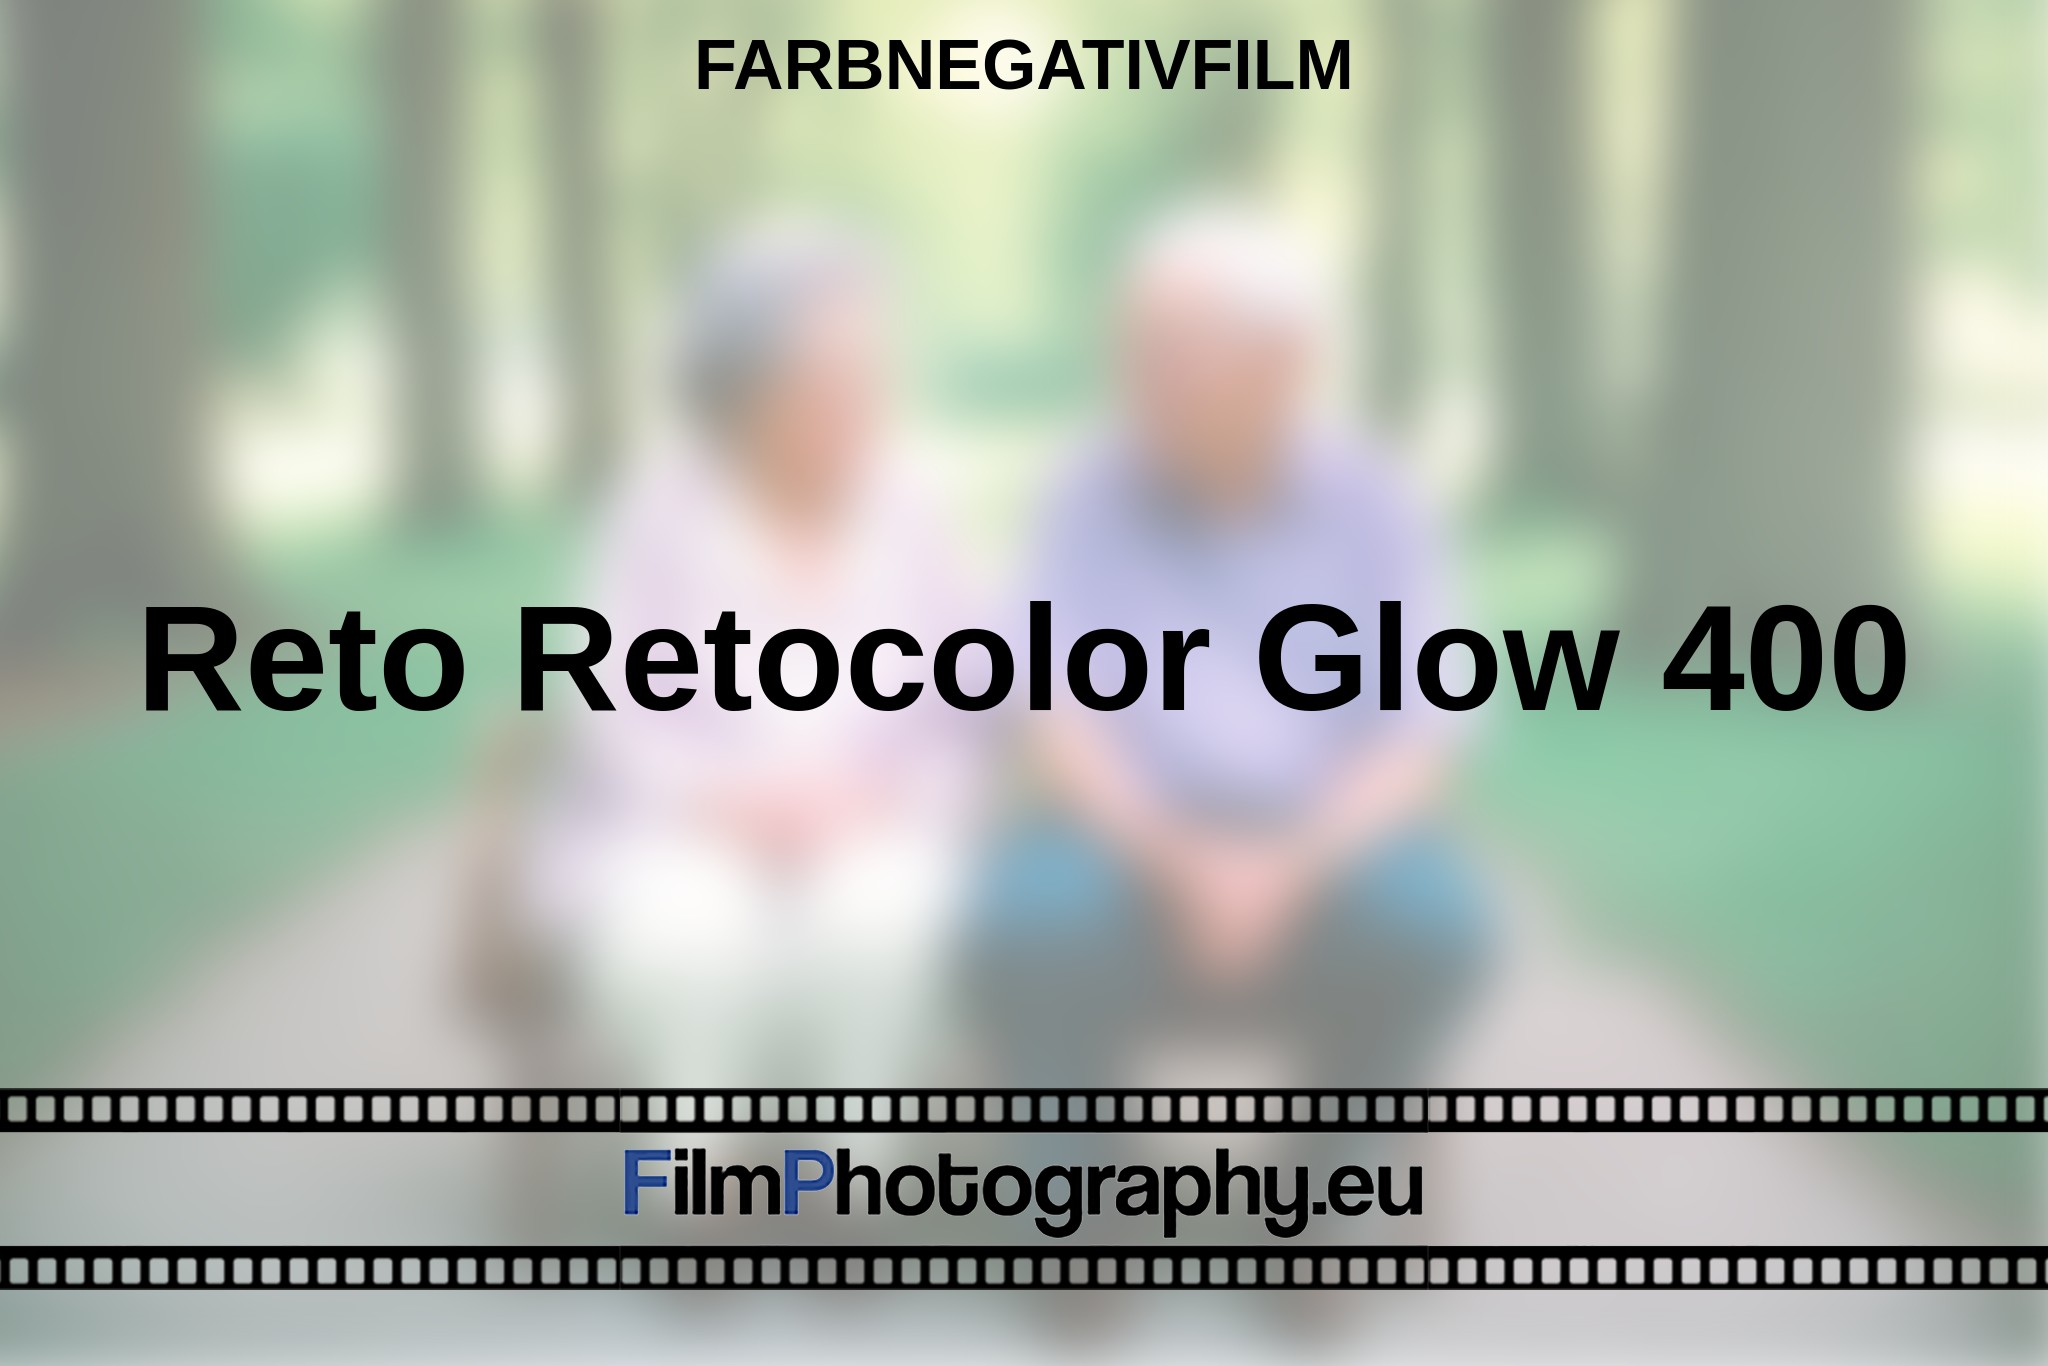 reto-retocolor-glow-400-farbnegativfilm-bnv.jpg